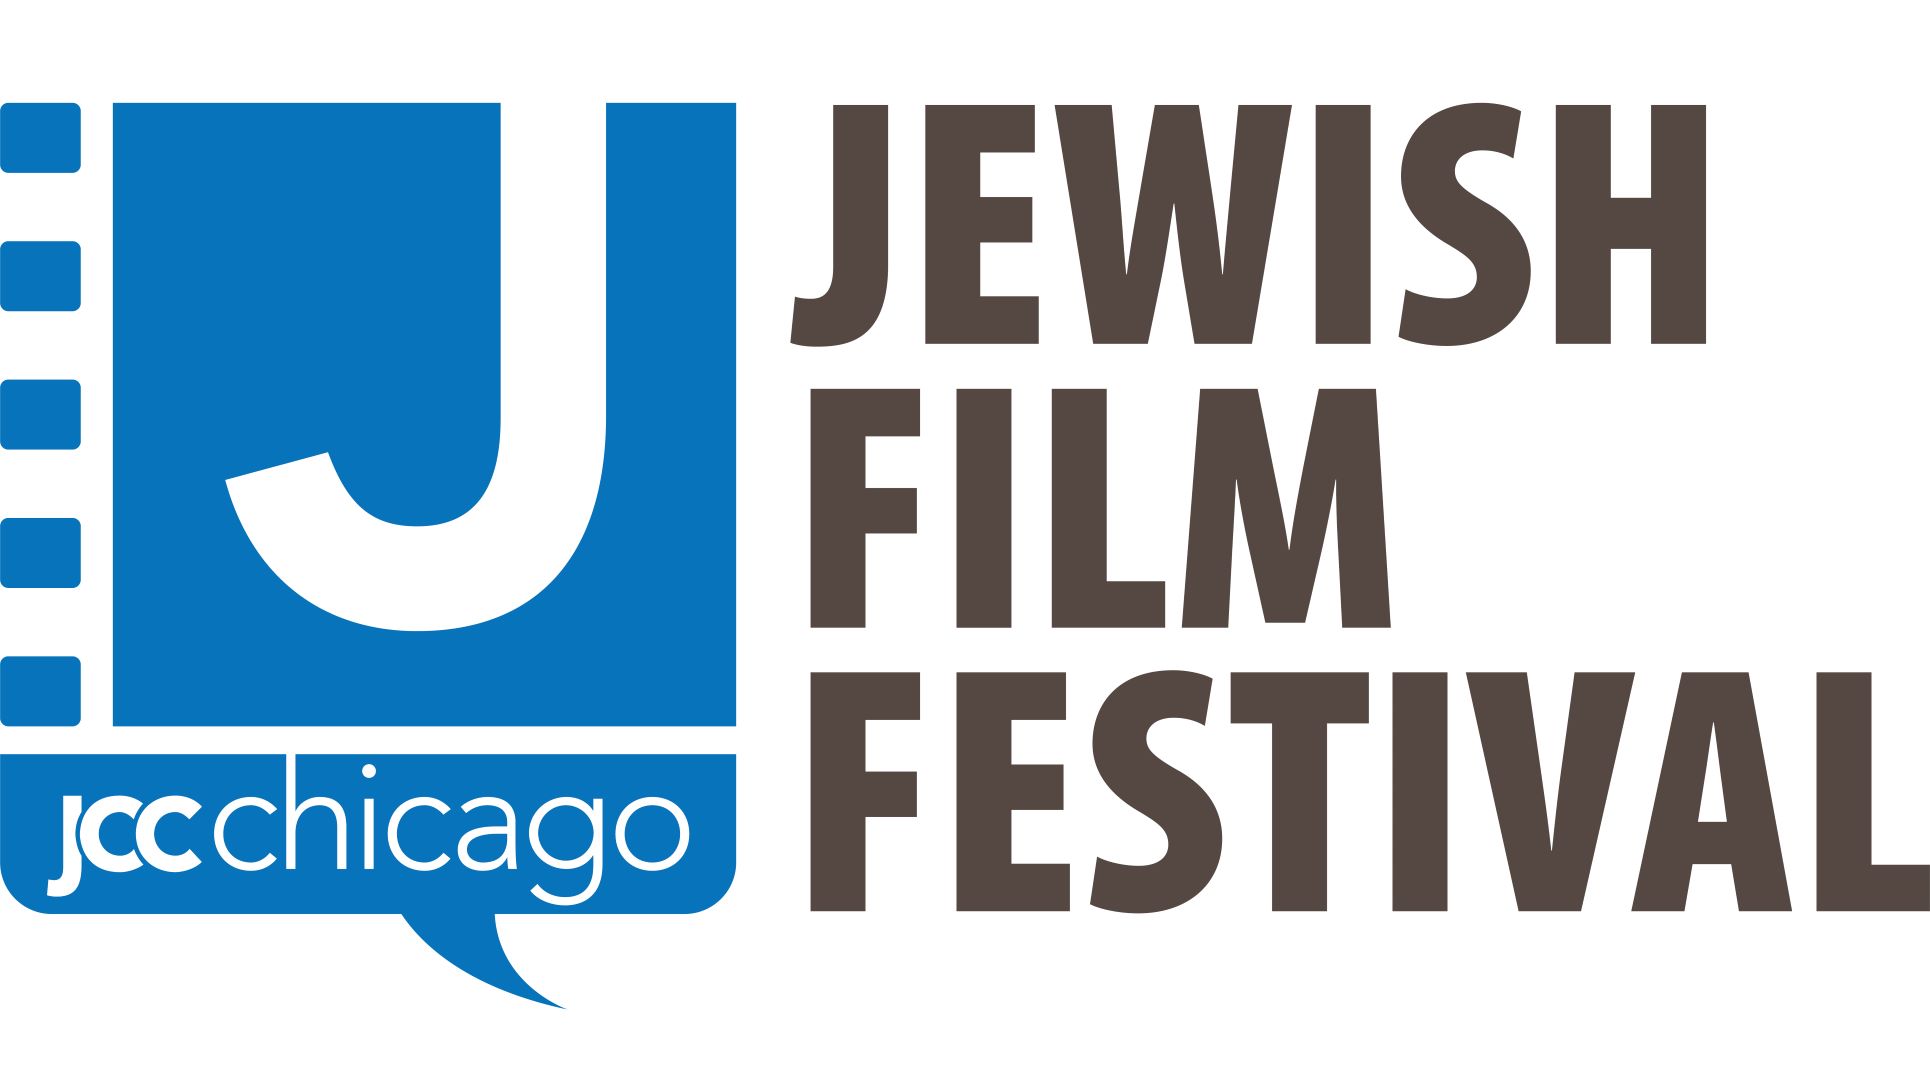 2022 JCC Chicago Jewish Film Festival